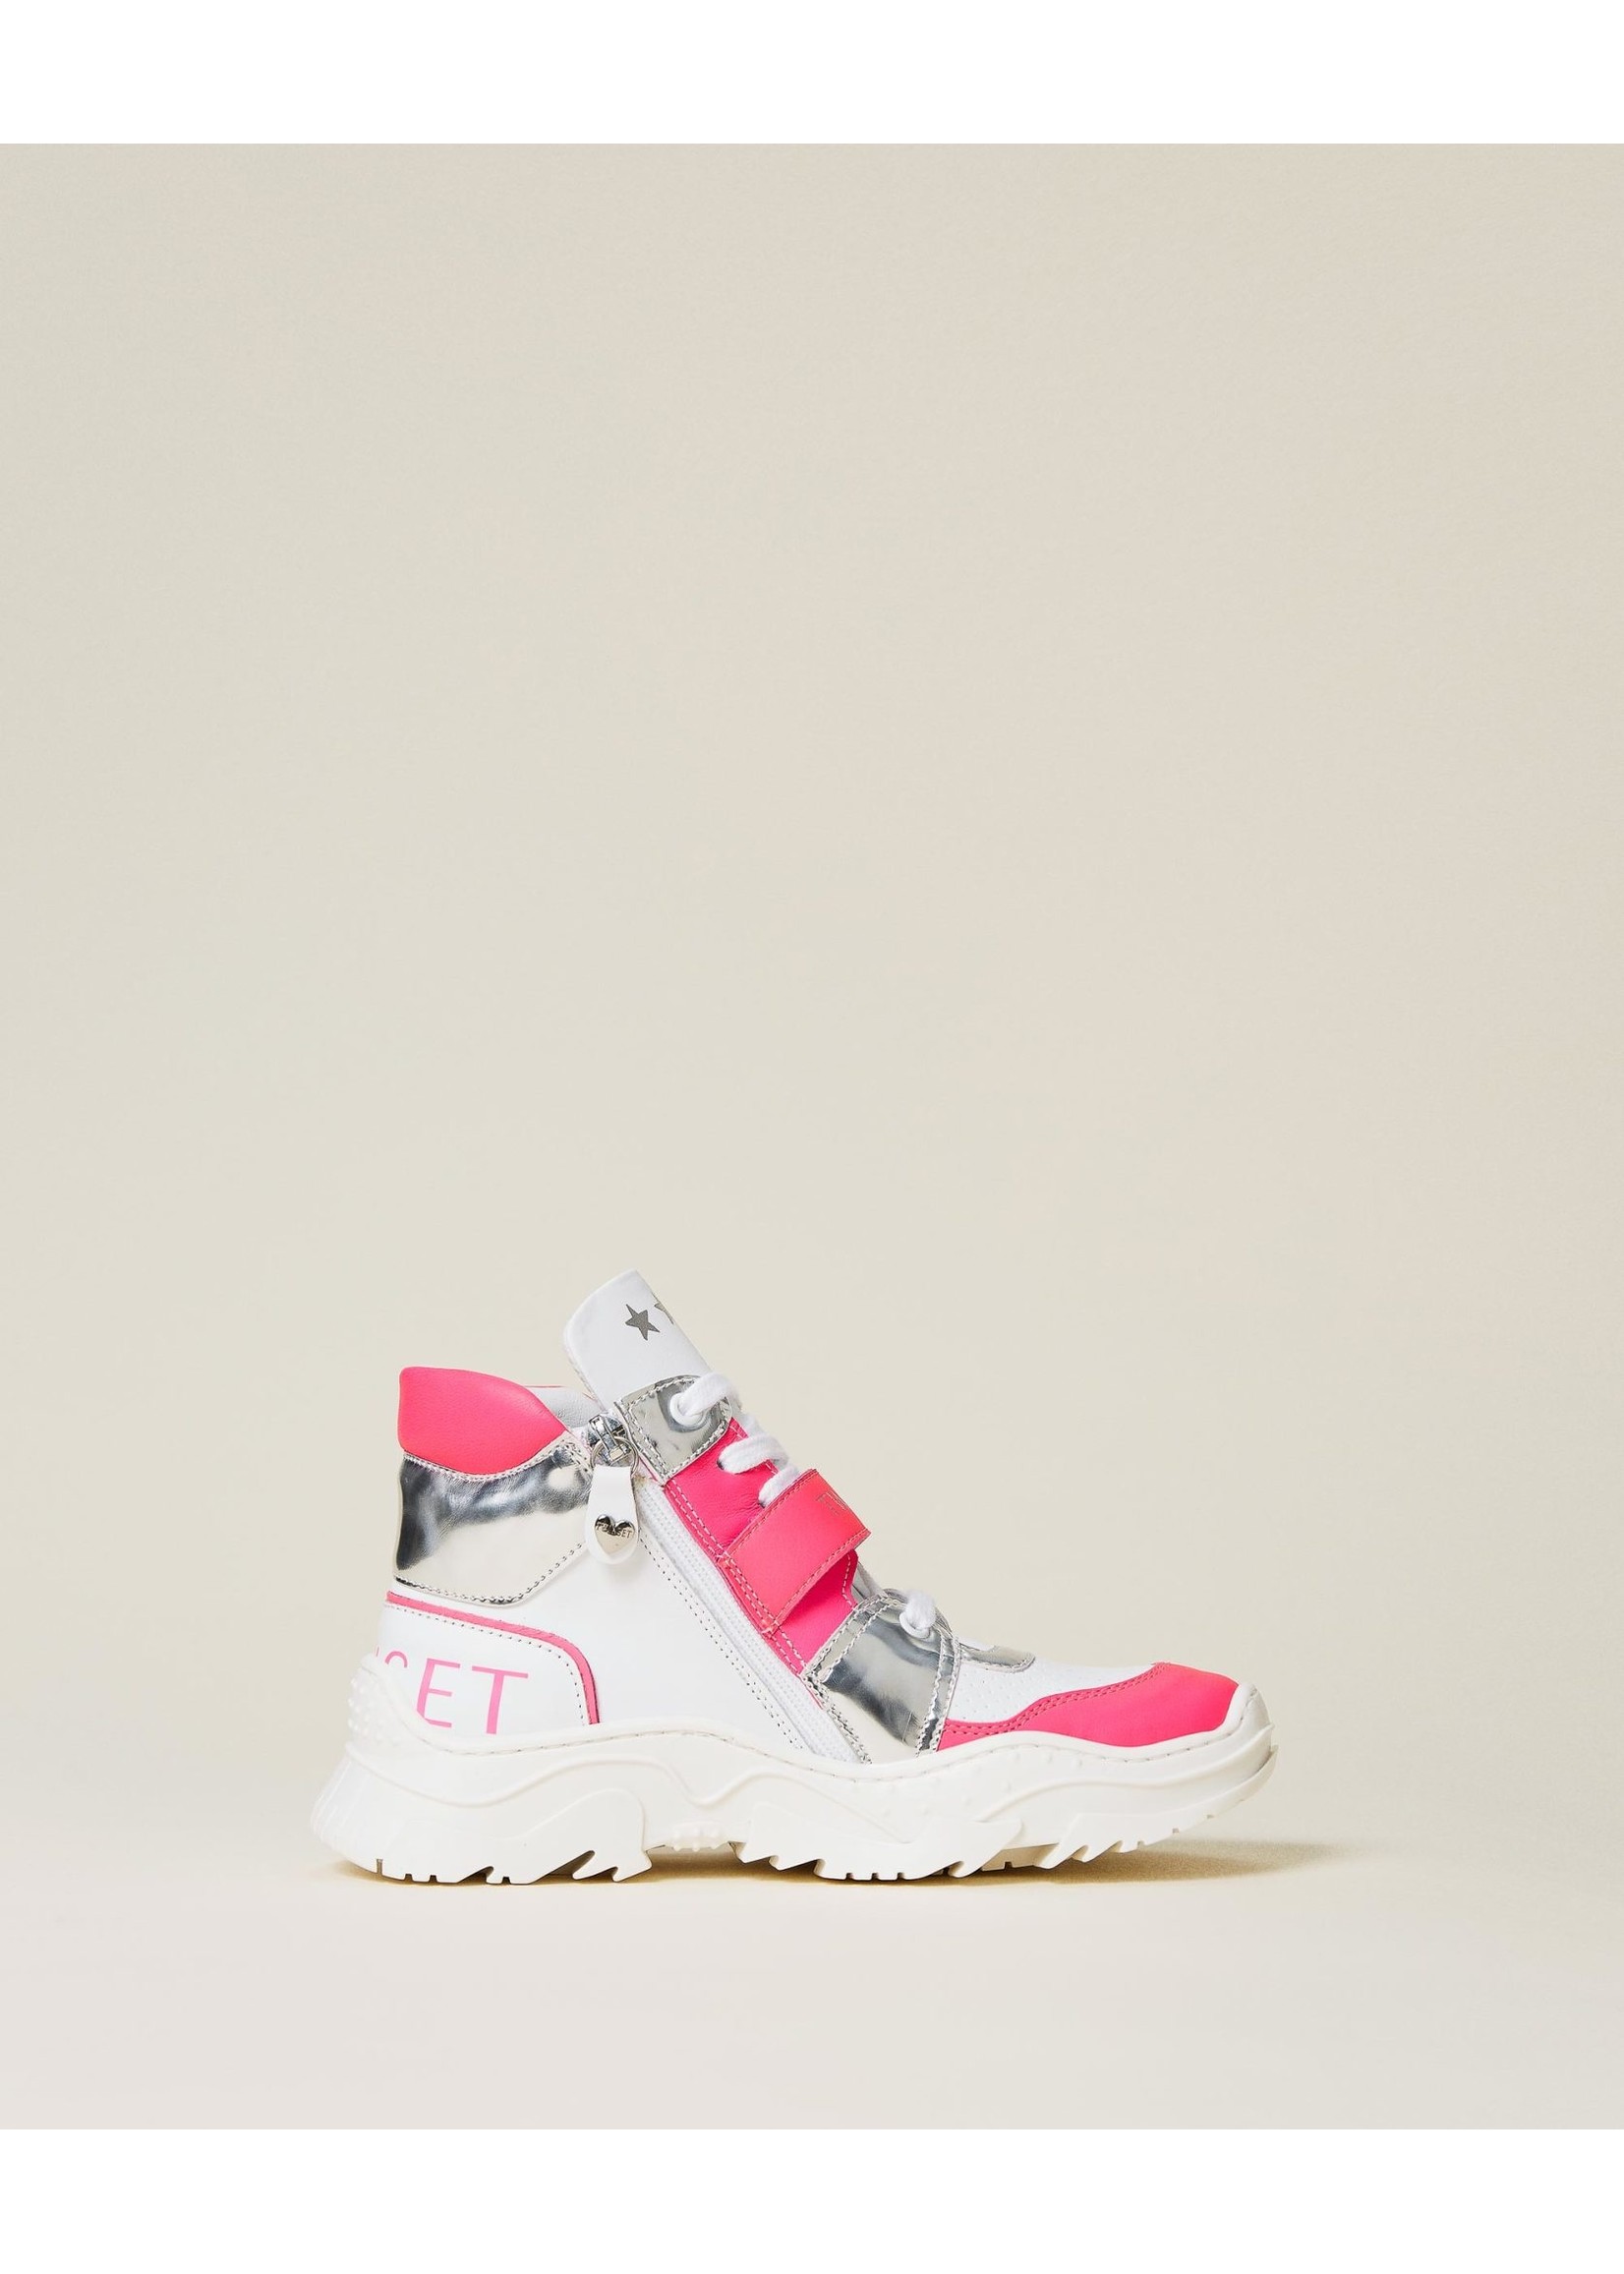 Twinset Twinset sneakers white/shock pink/silver - 221GCJ010